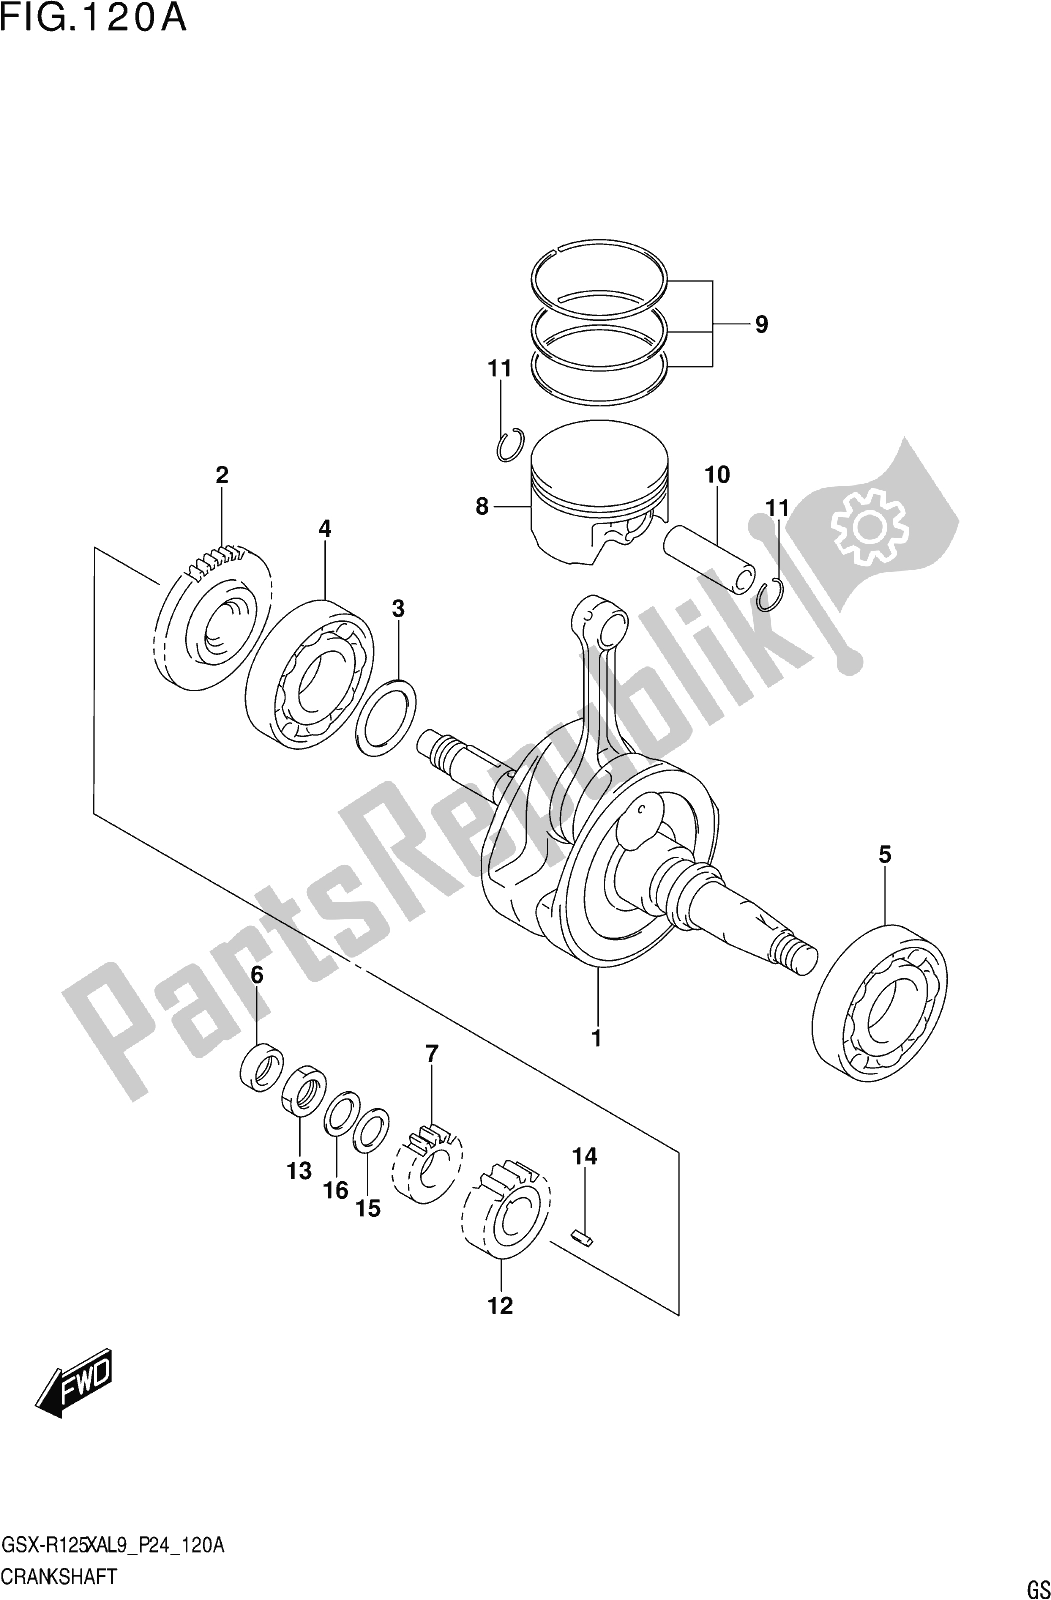 Todas las partes para Fig. 120a Crankshaft de Suzuki Gsx-r 125 XA 2019